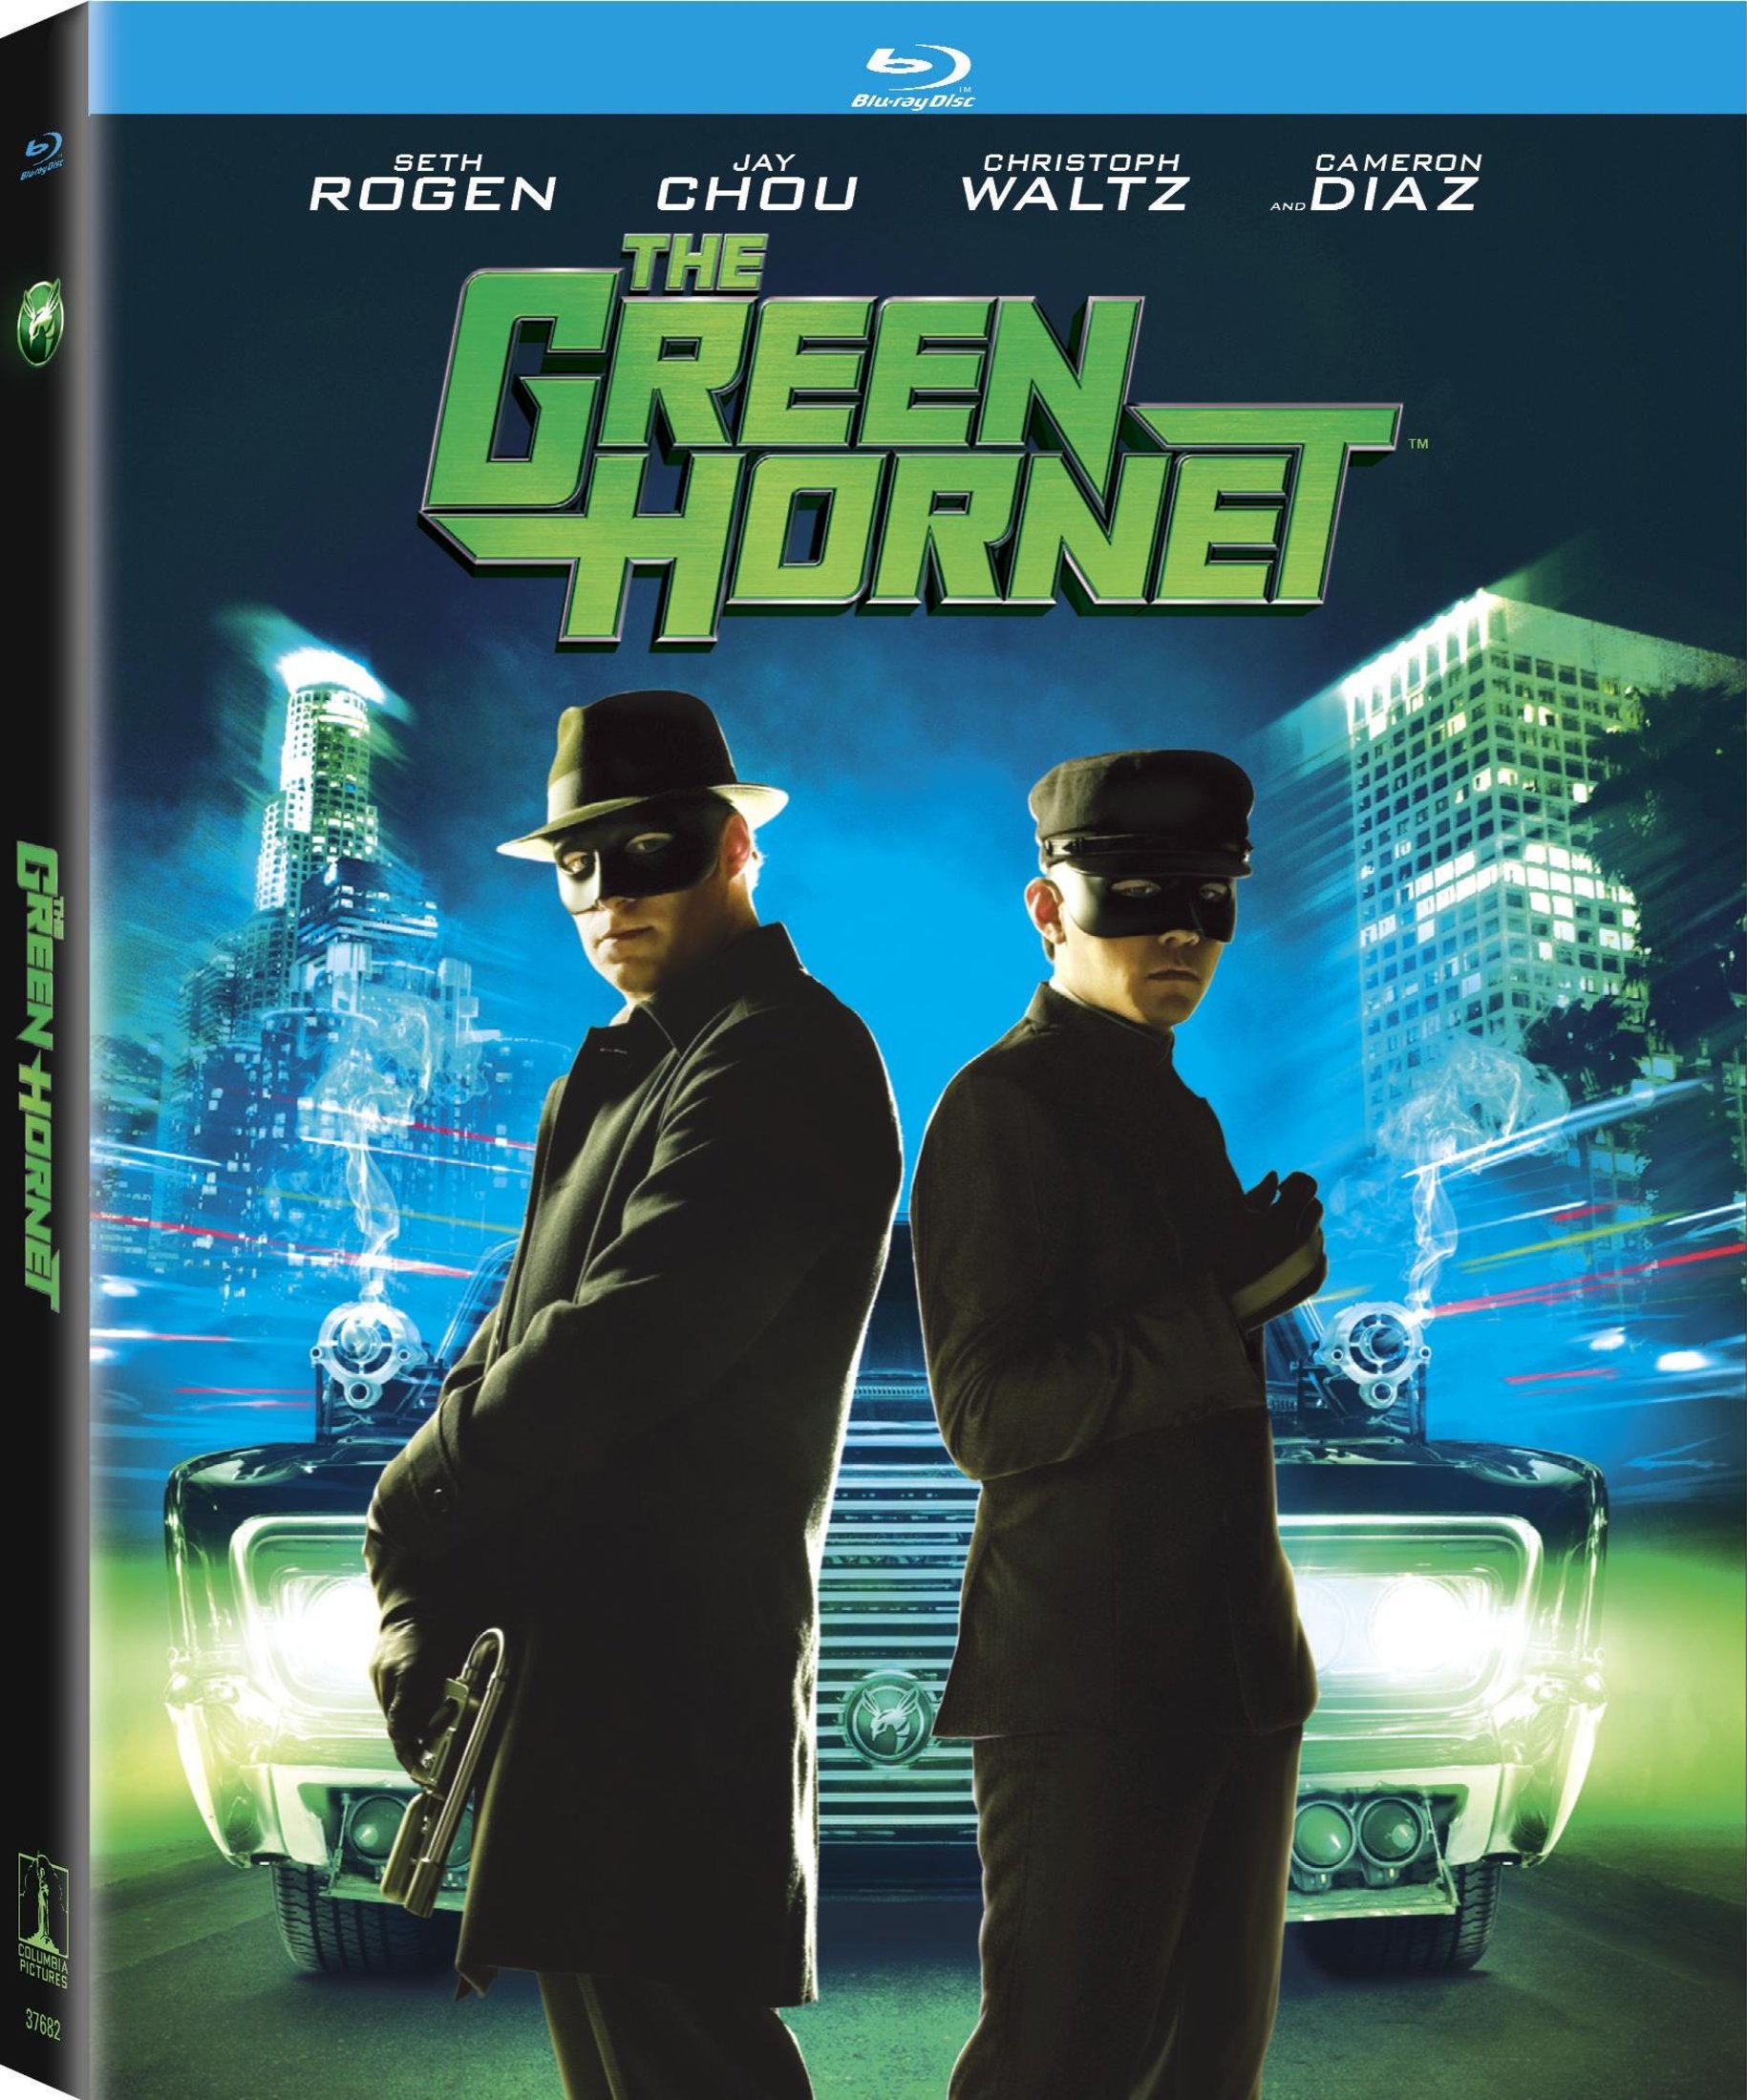 [青蜂侠].The.Green.Hornet.2011.3D.BluRay.1080p.AVC.DD.5.1-CRoW     41.58G0 @# Q3 z1 u+ v+ t& G& m7 t-1.jpg